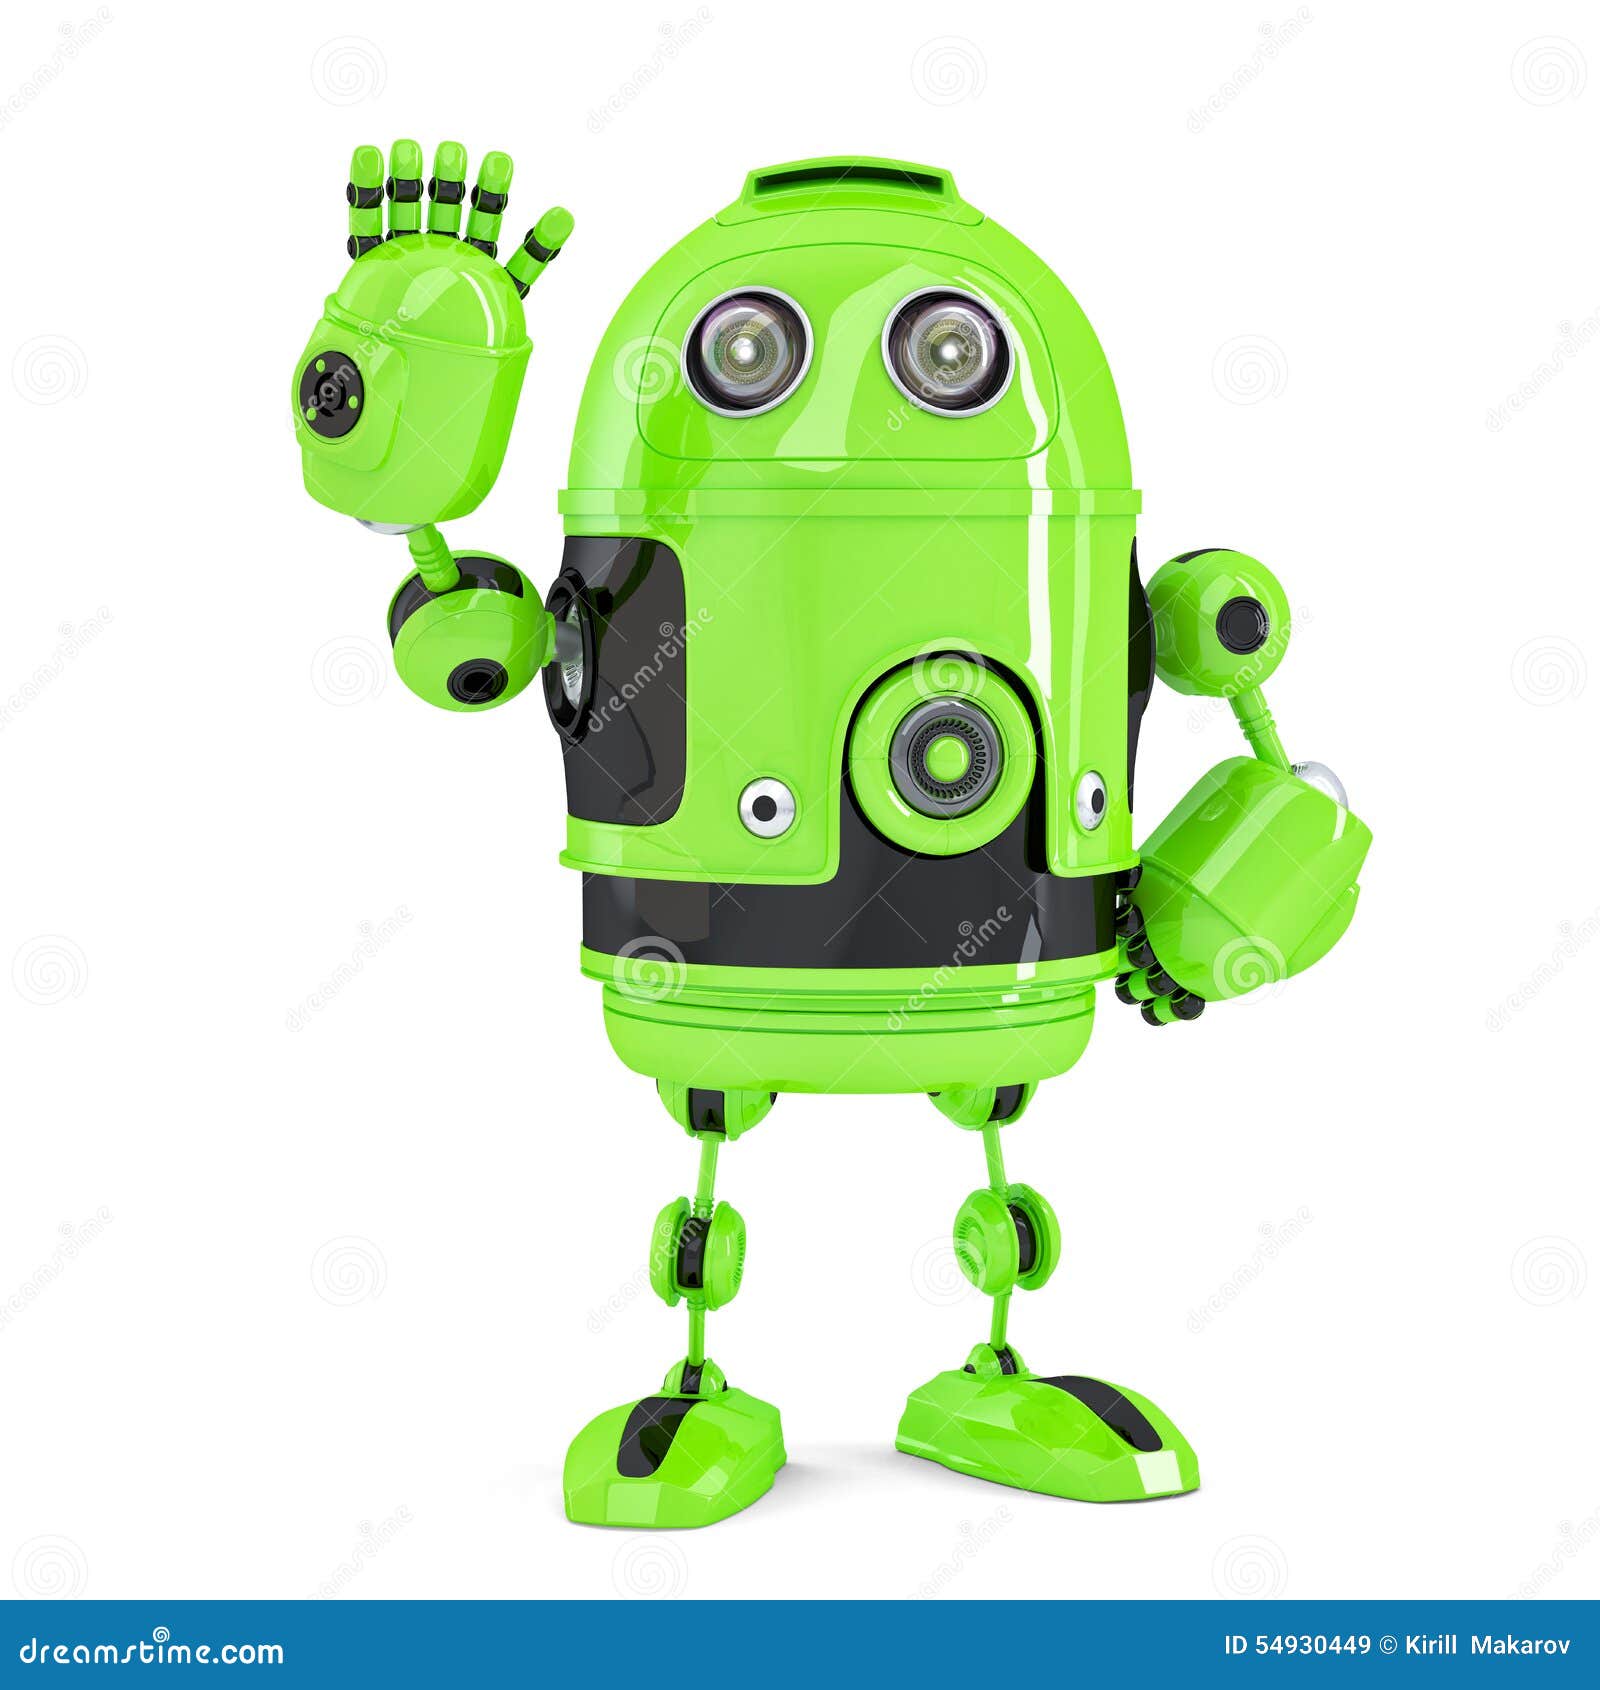 green 3d robot waving hello. . contains clipping path